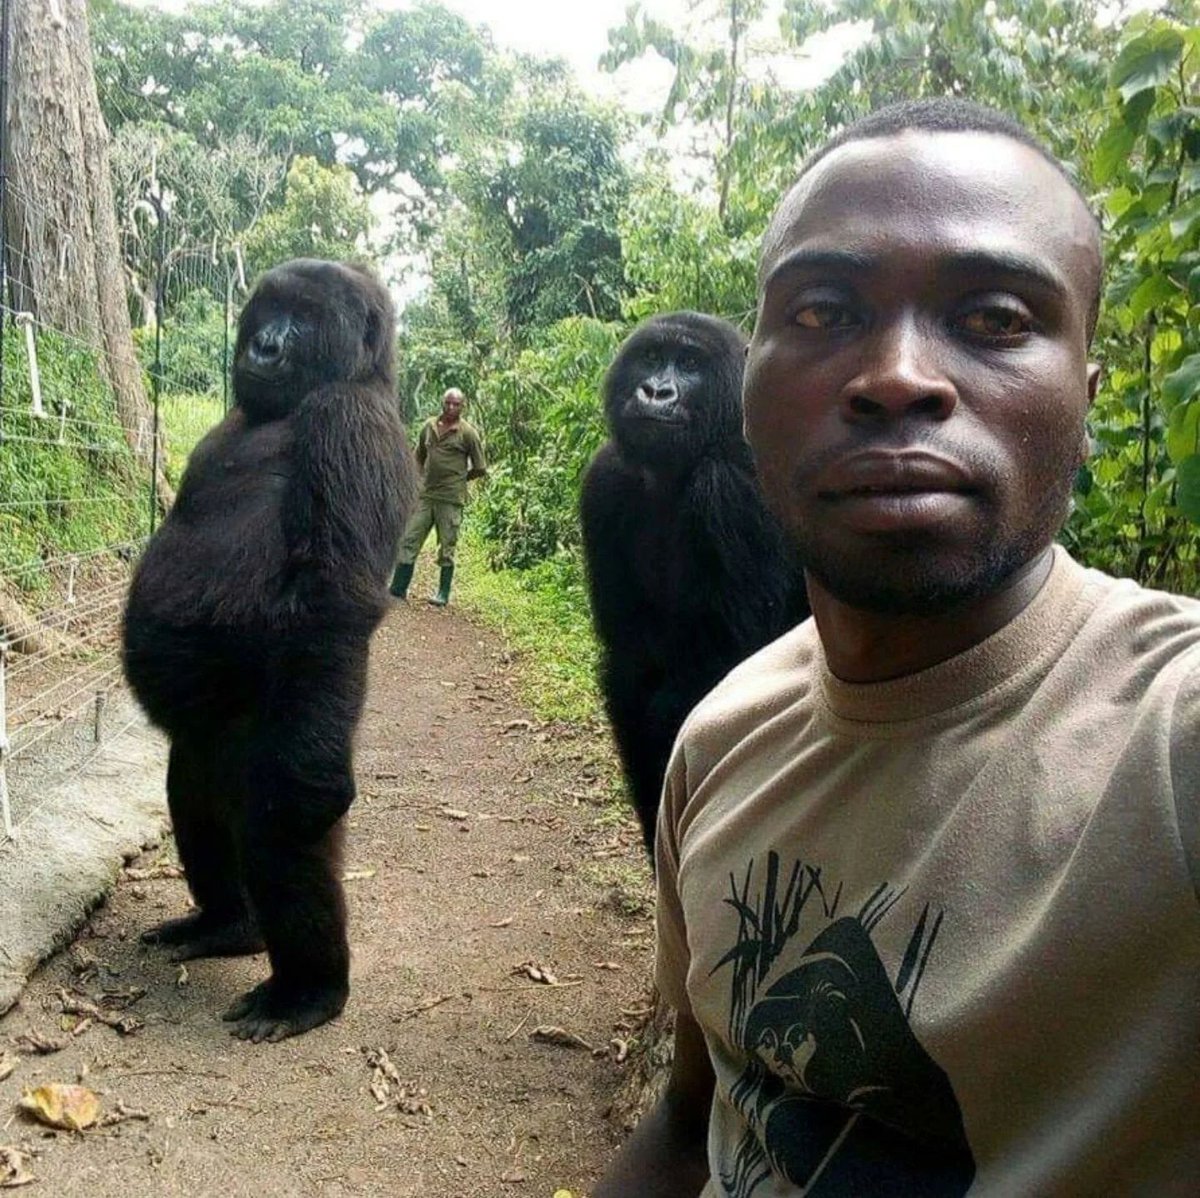 Walai hiyo gorilla iko hapo naijua😳😂